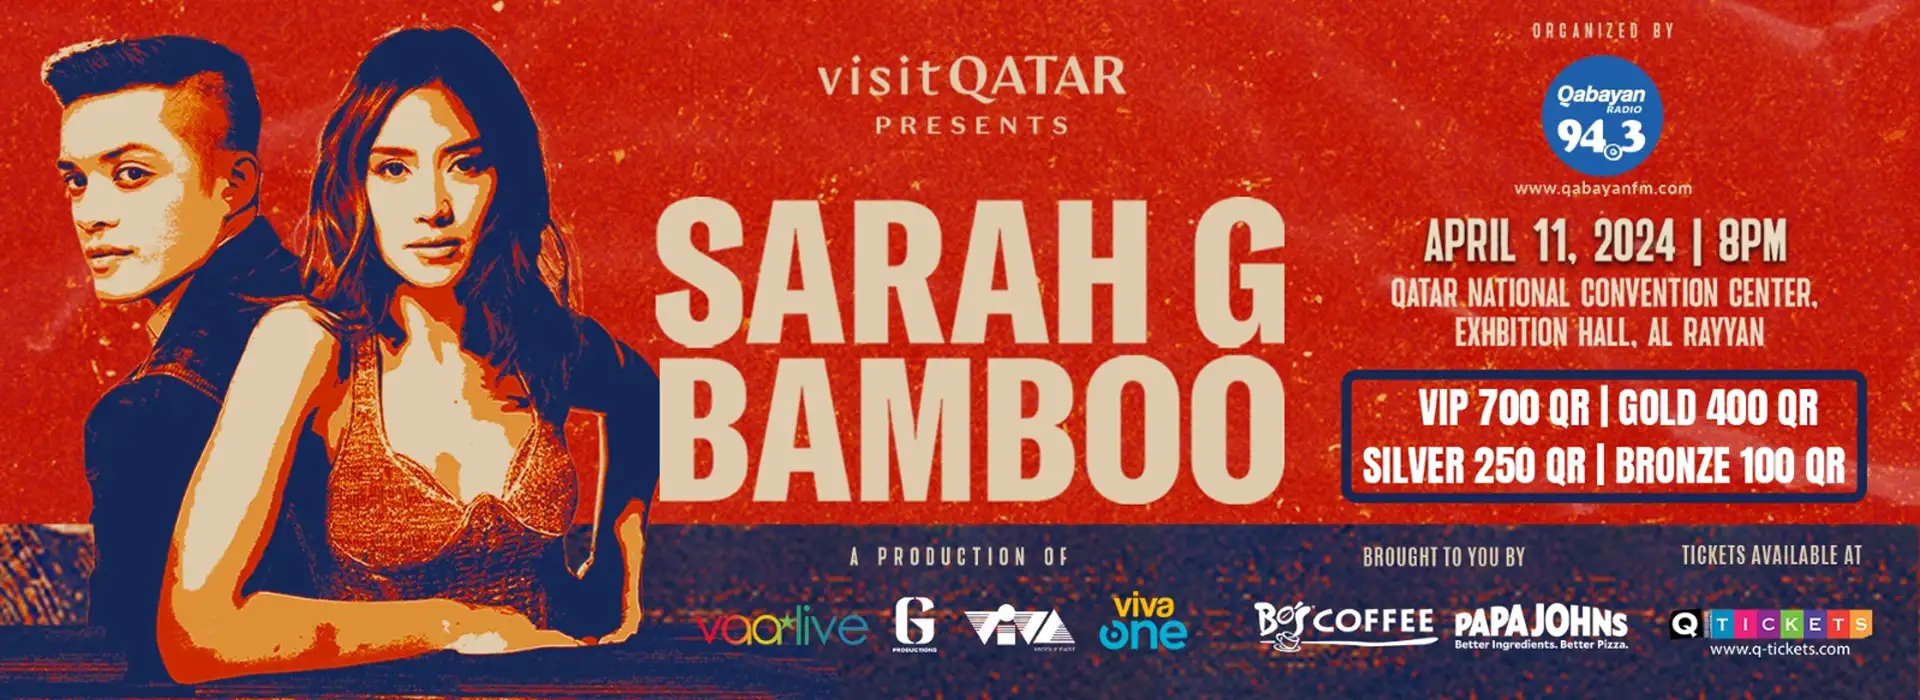 Sarah G x Bamboo Live in Doha